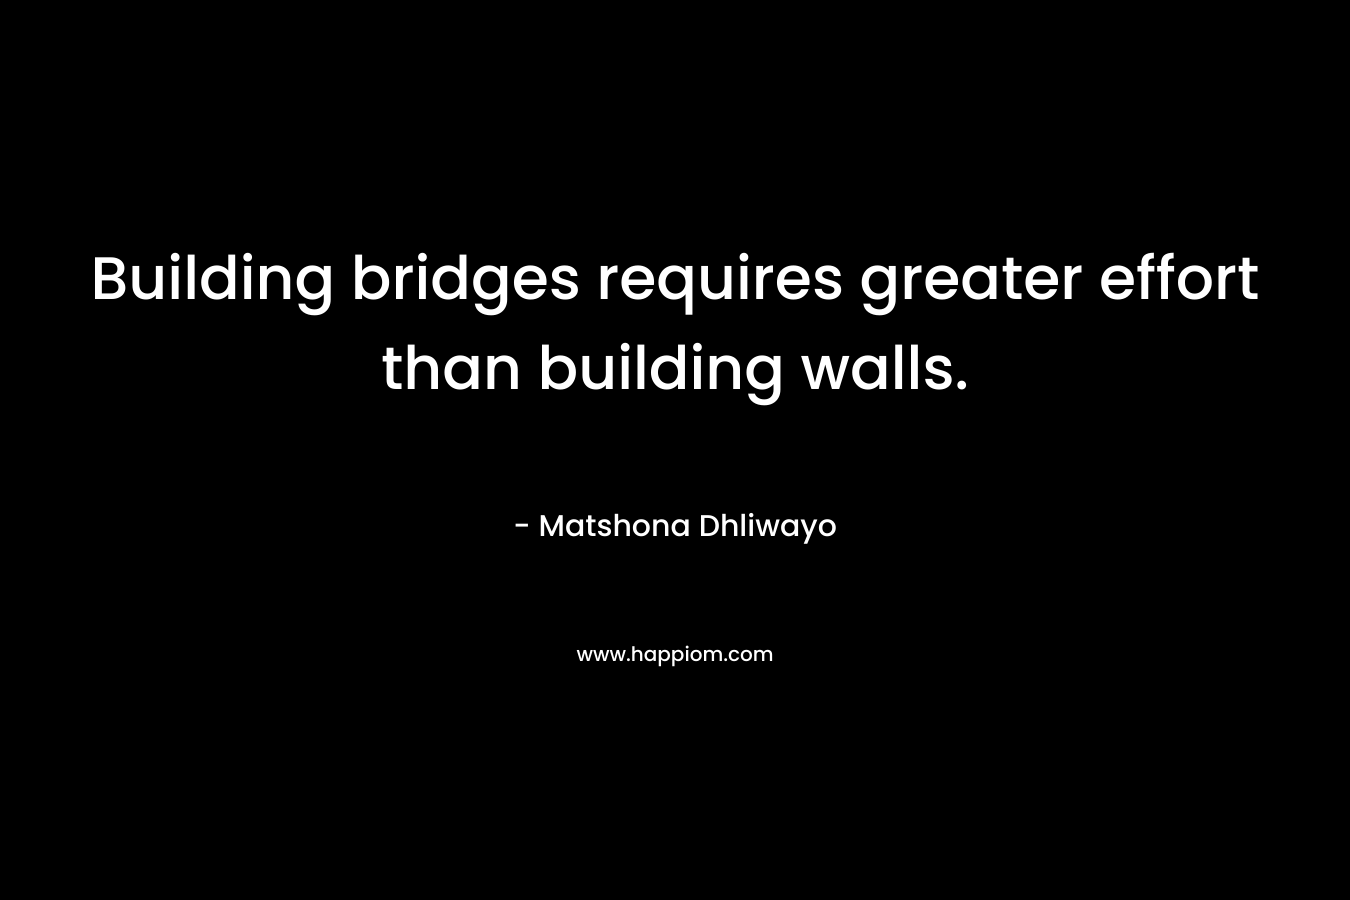 Building bridges requires greater effort than building walls.